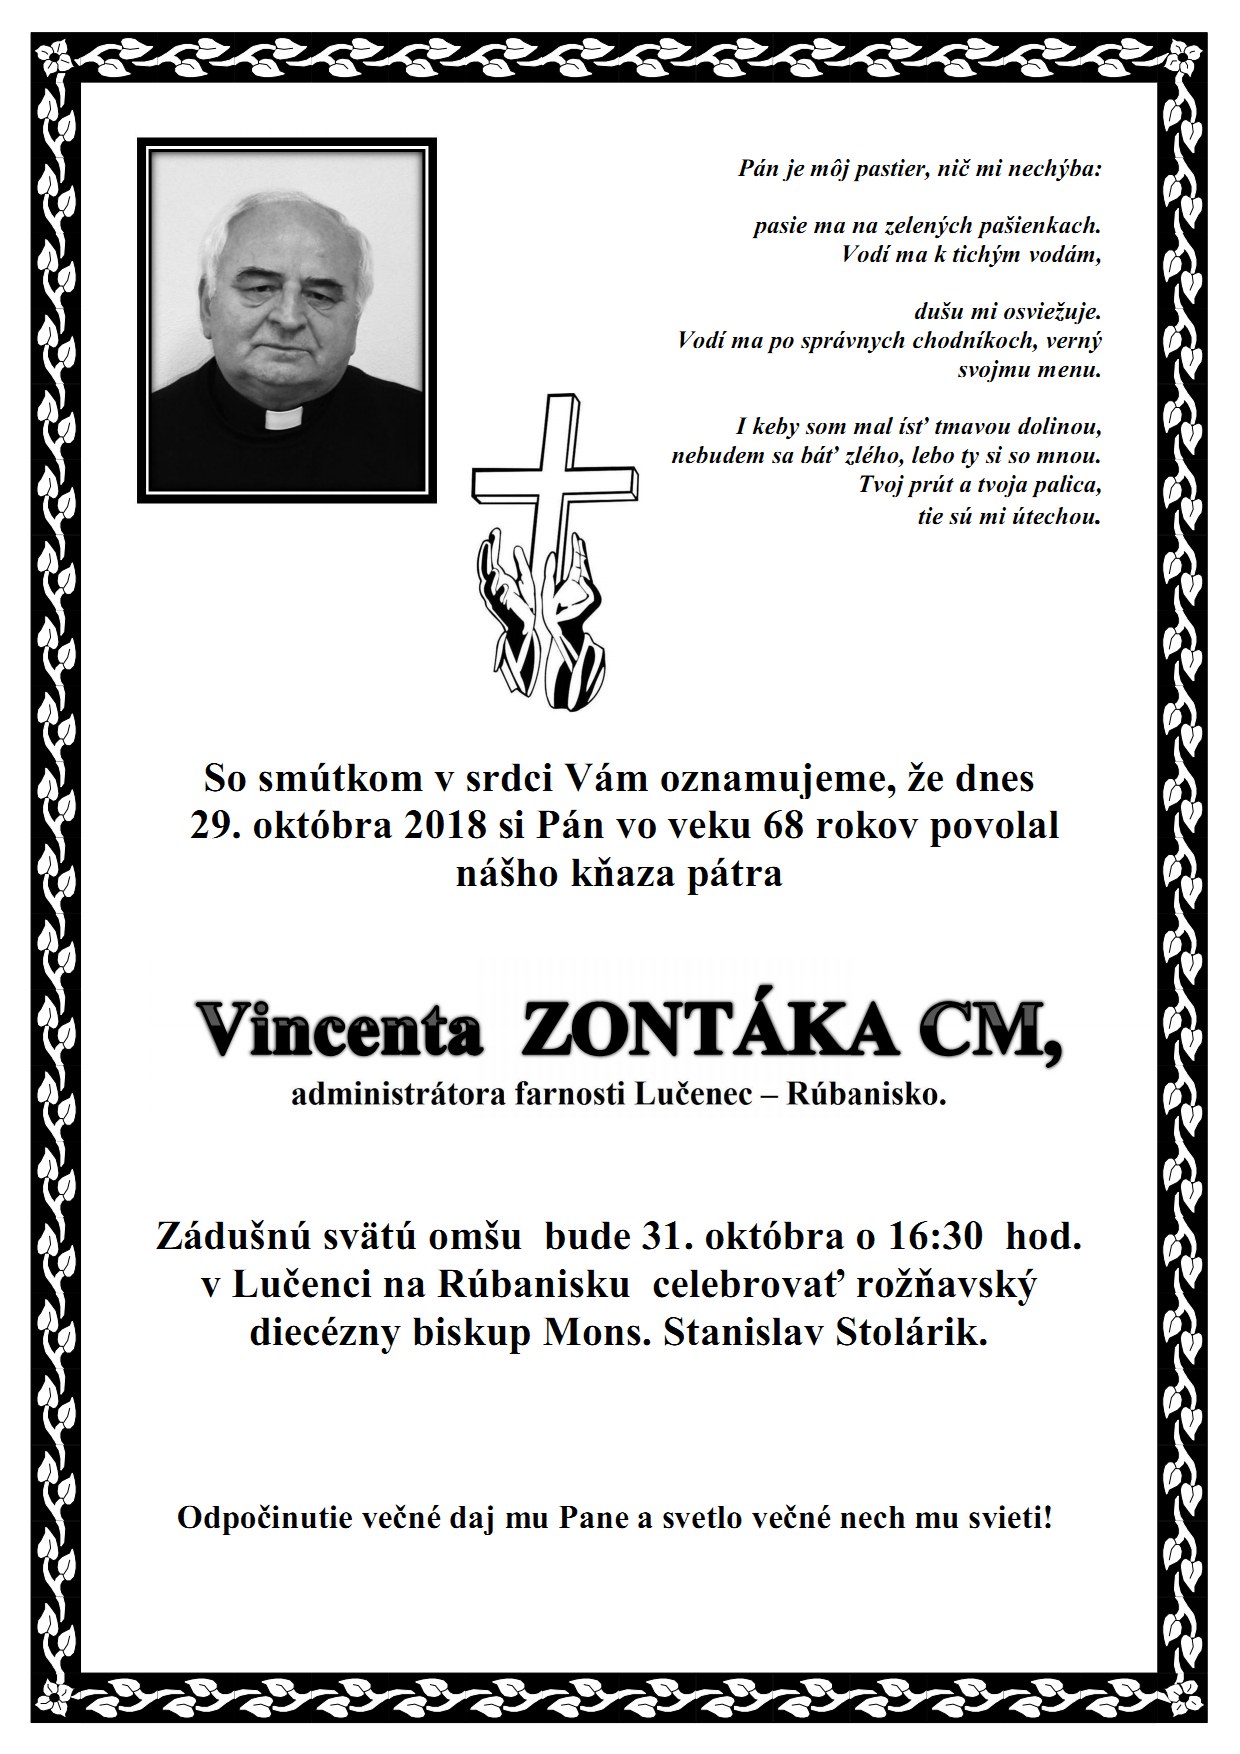 Zomrel kňaz Vincent Zonták, CM